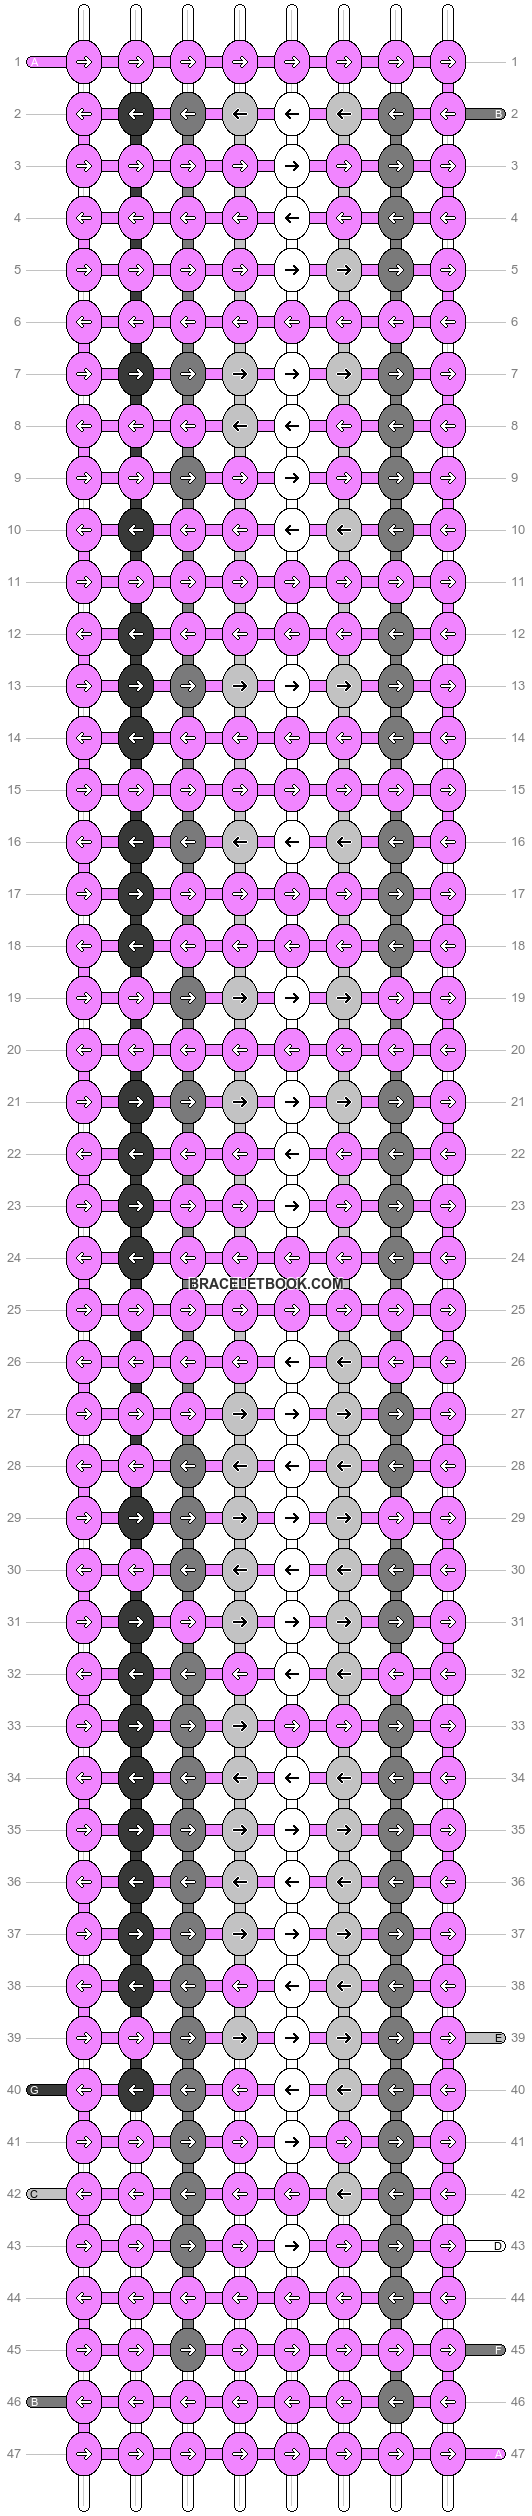 Alpha pattern #42471 variation #62788 pattern